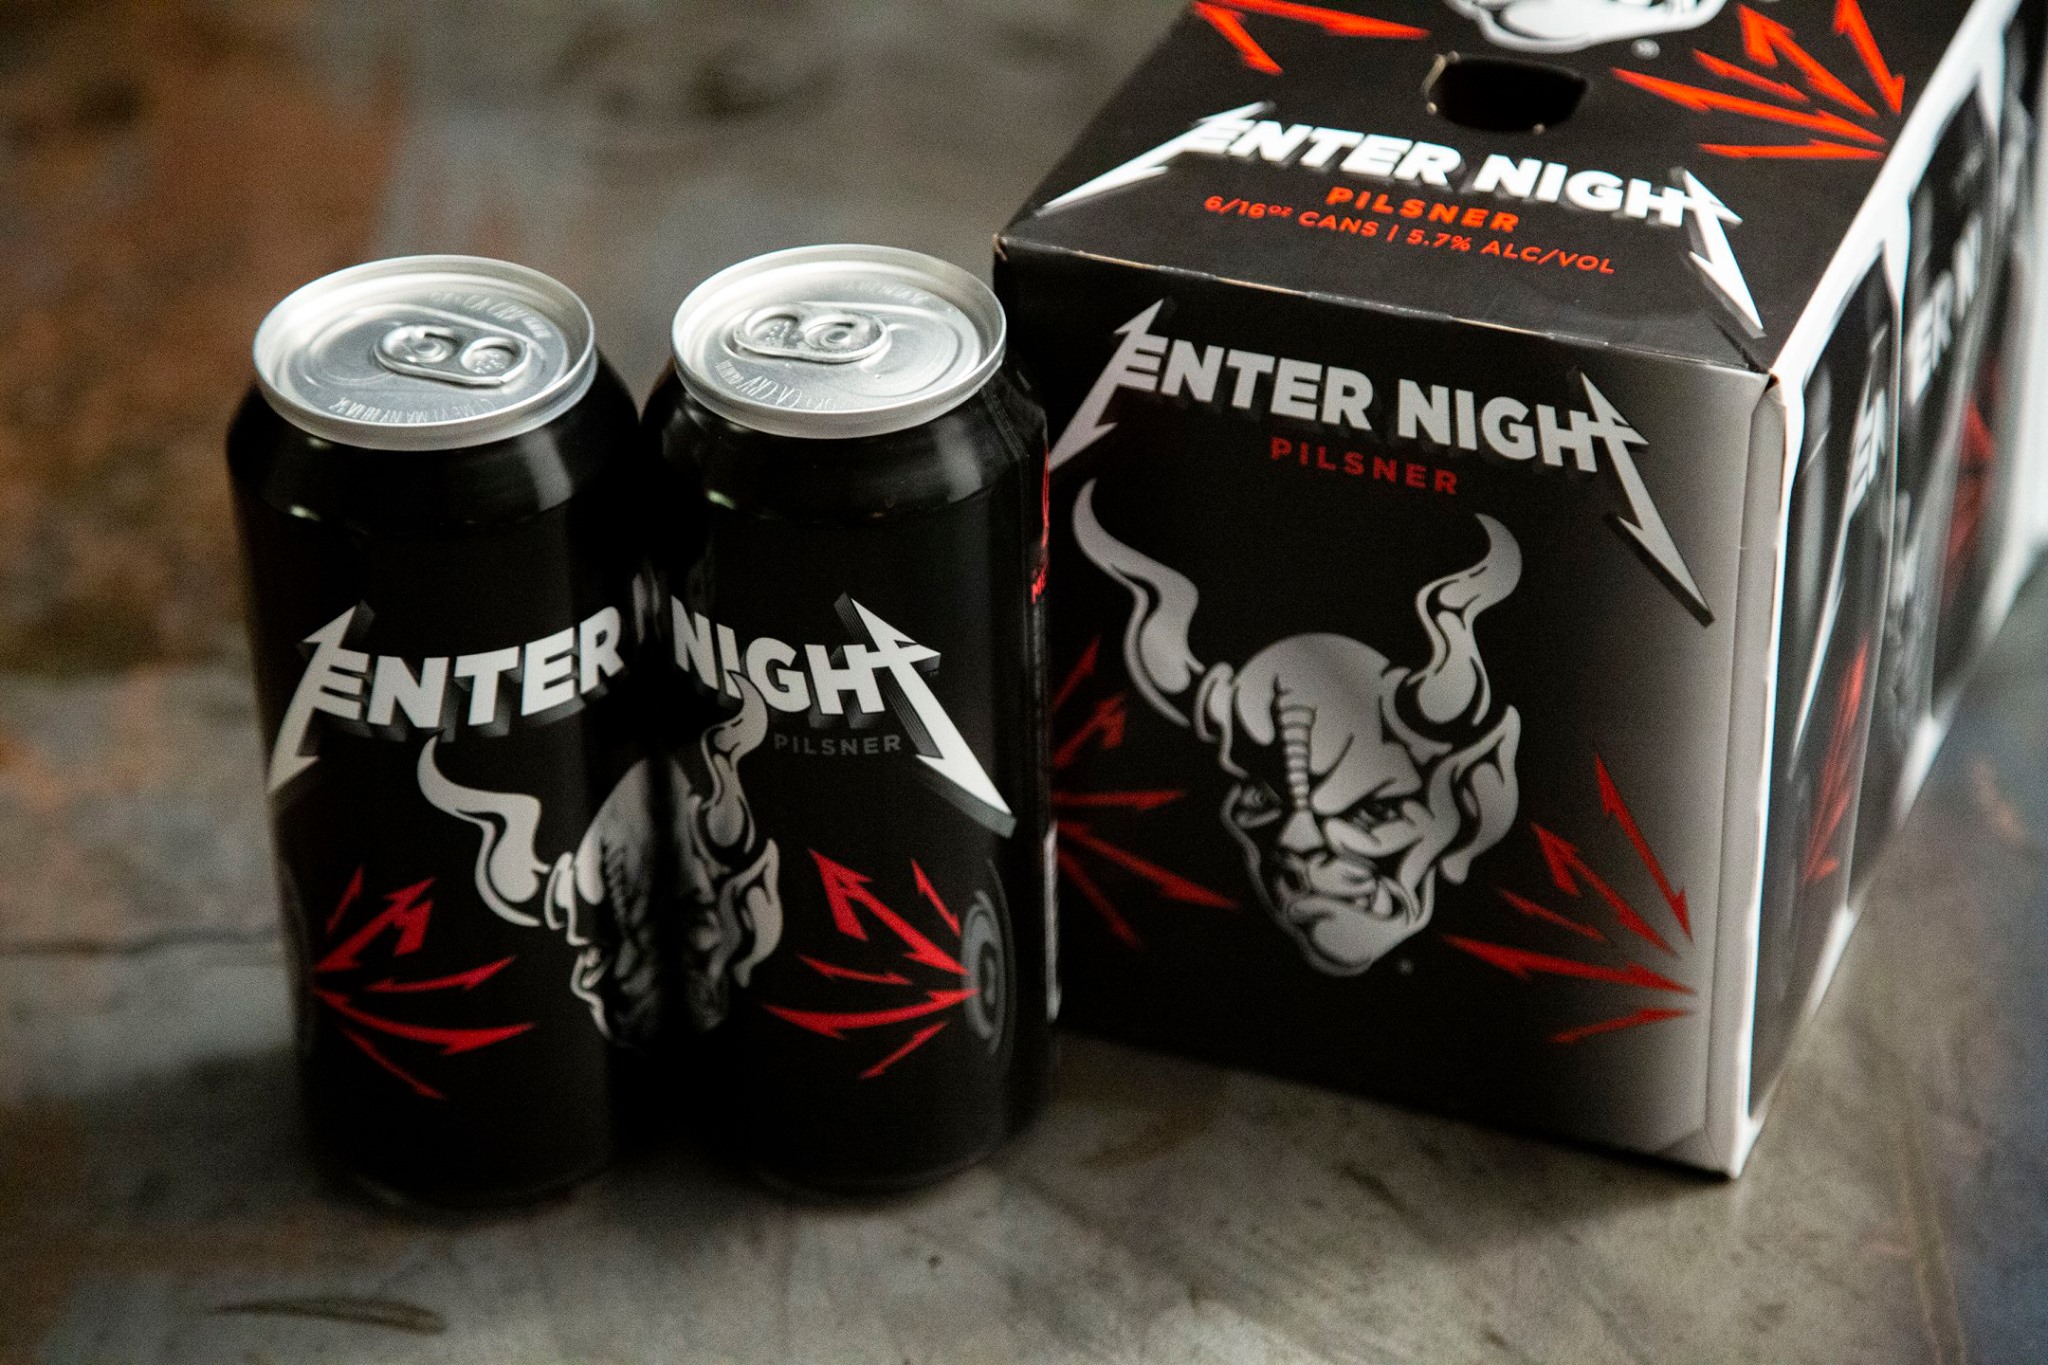 Metallica releasing their own beer ‘Enter Night’ Pilsner